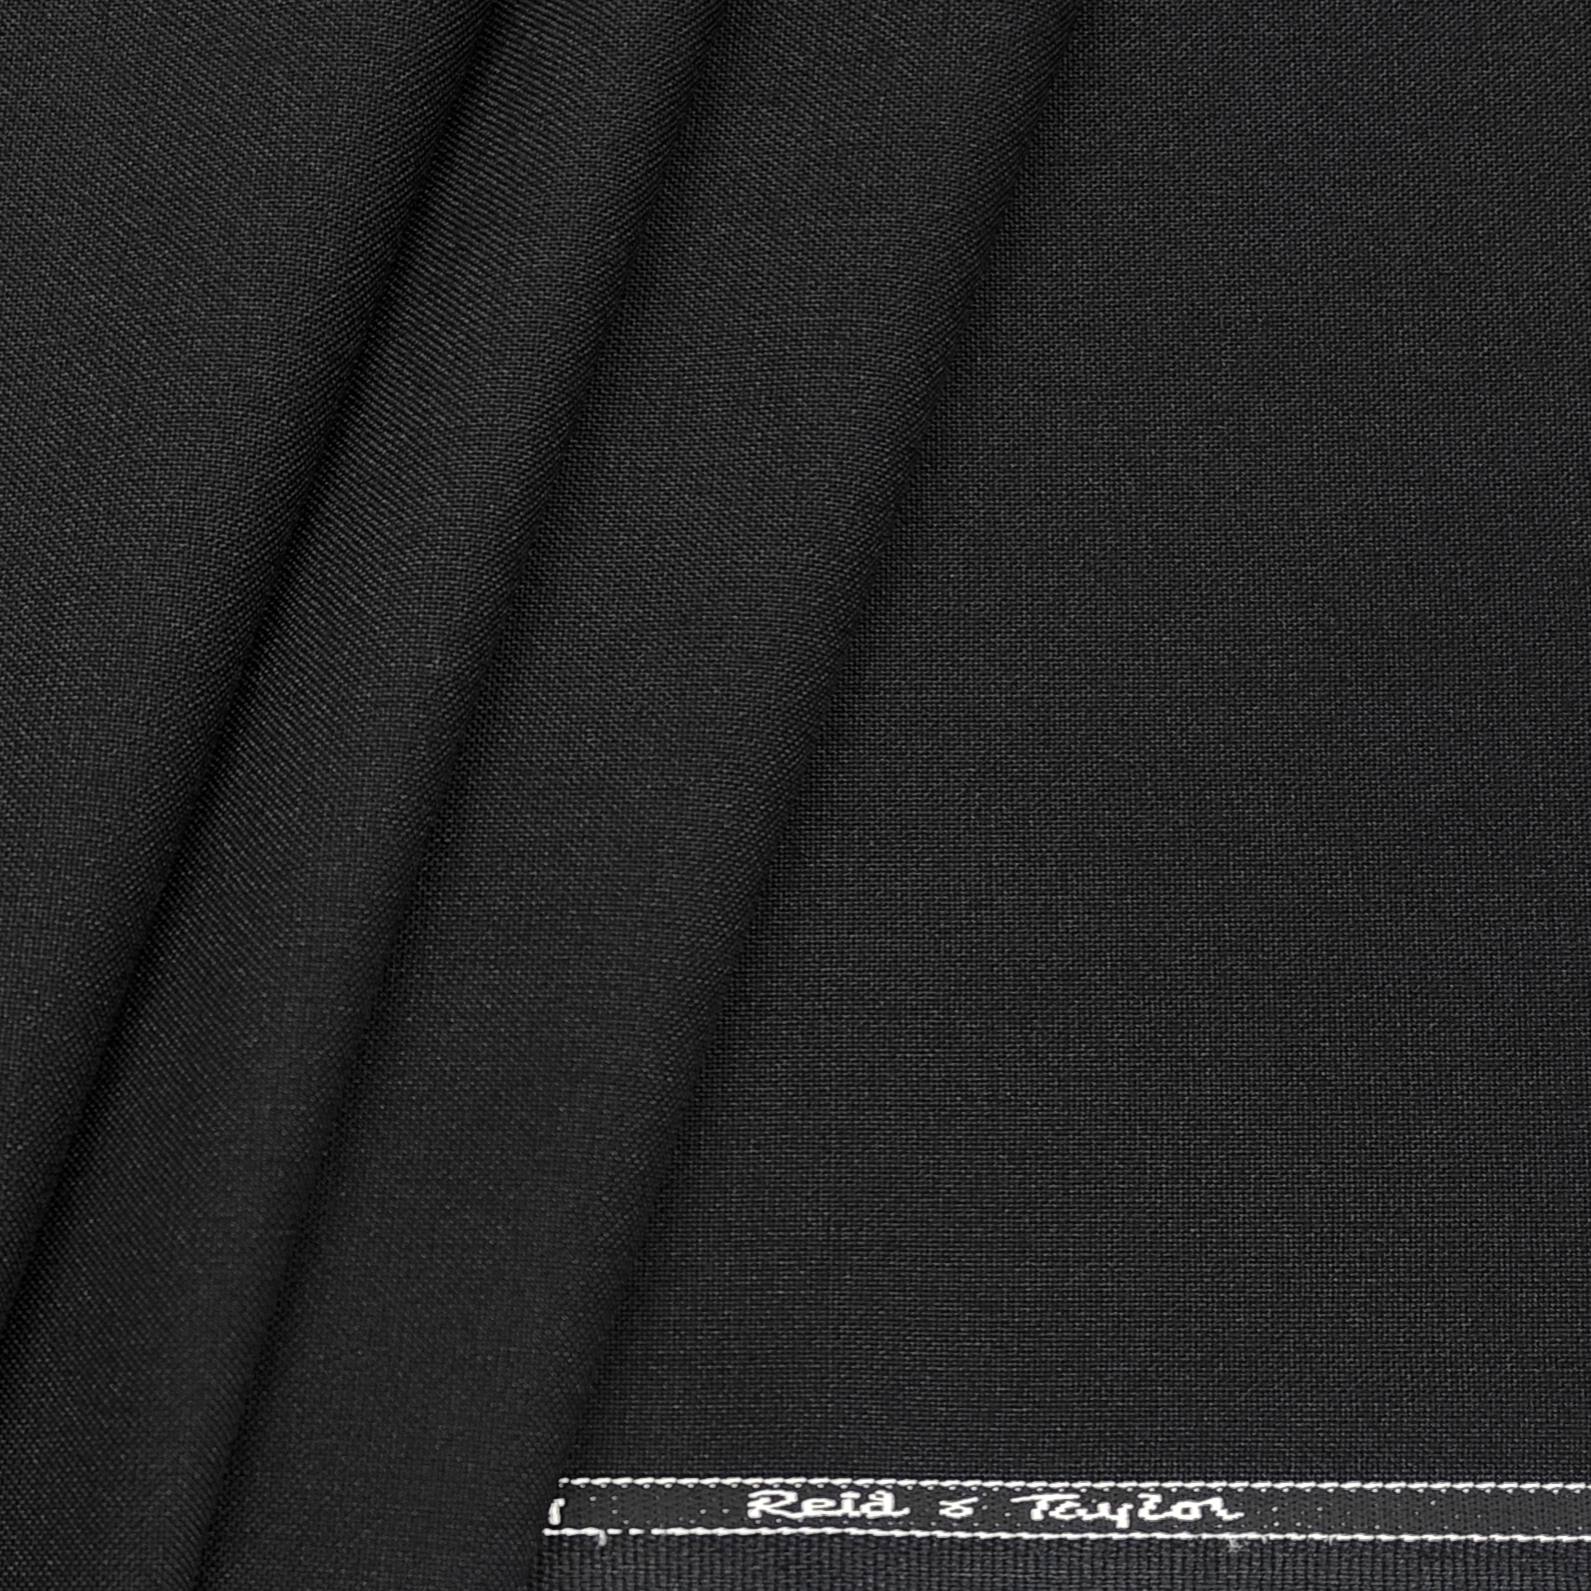 Reid & Taylor Terrywool Black Matti Pant Fabric for Men